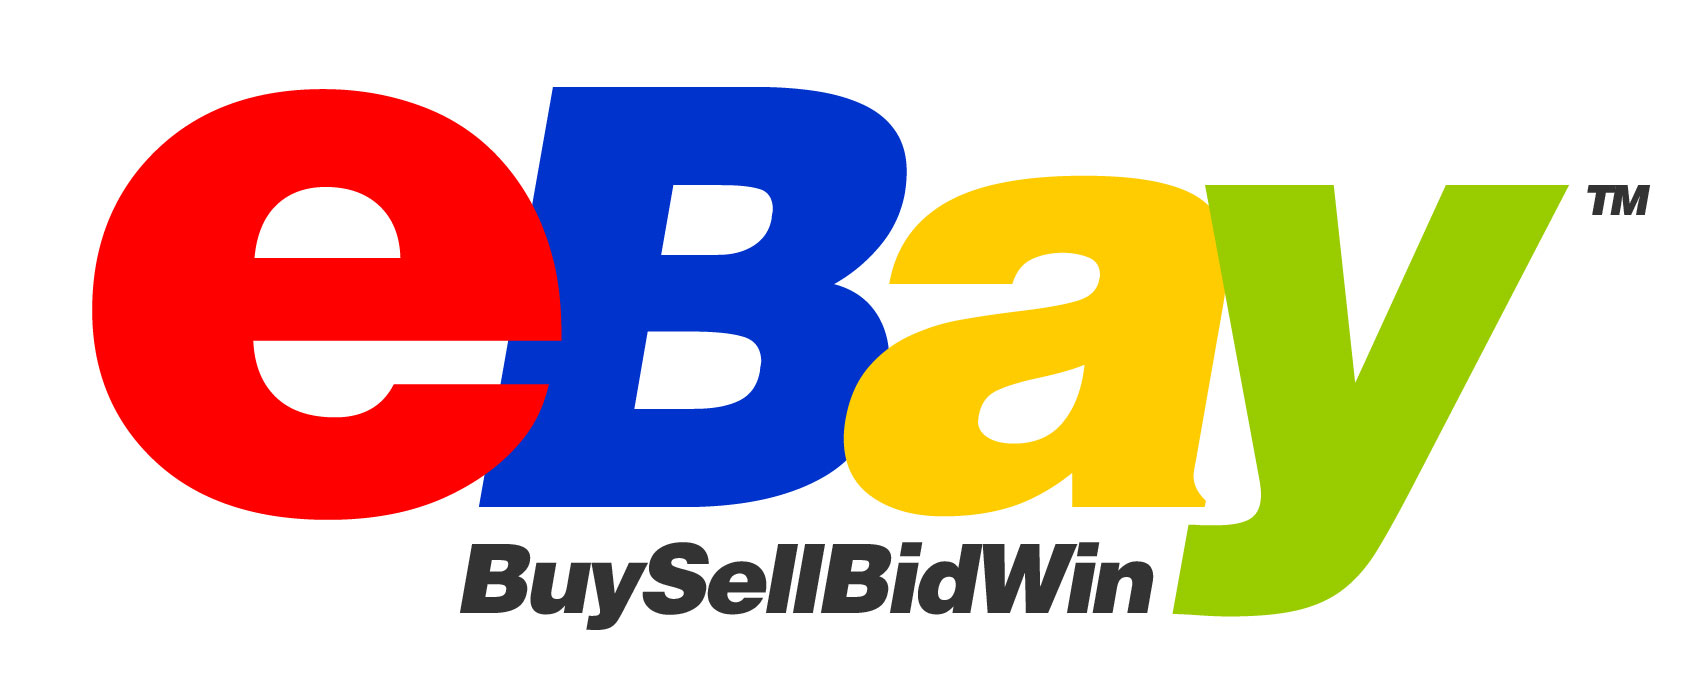 eBay logo disaster…? | What's That Font?